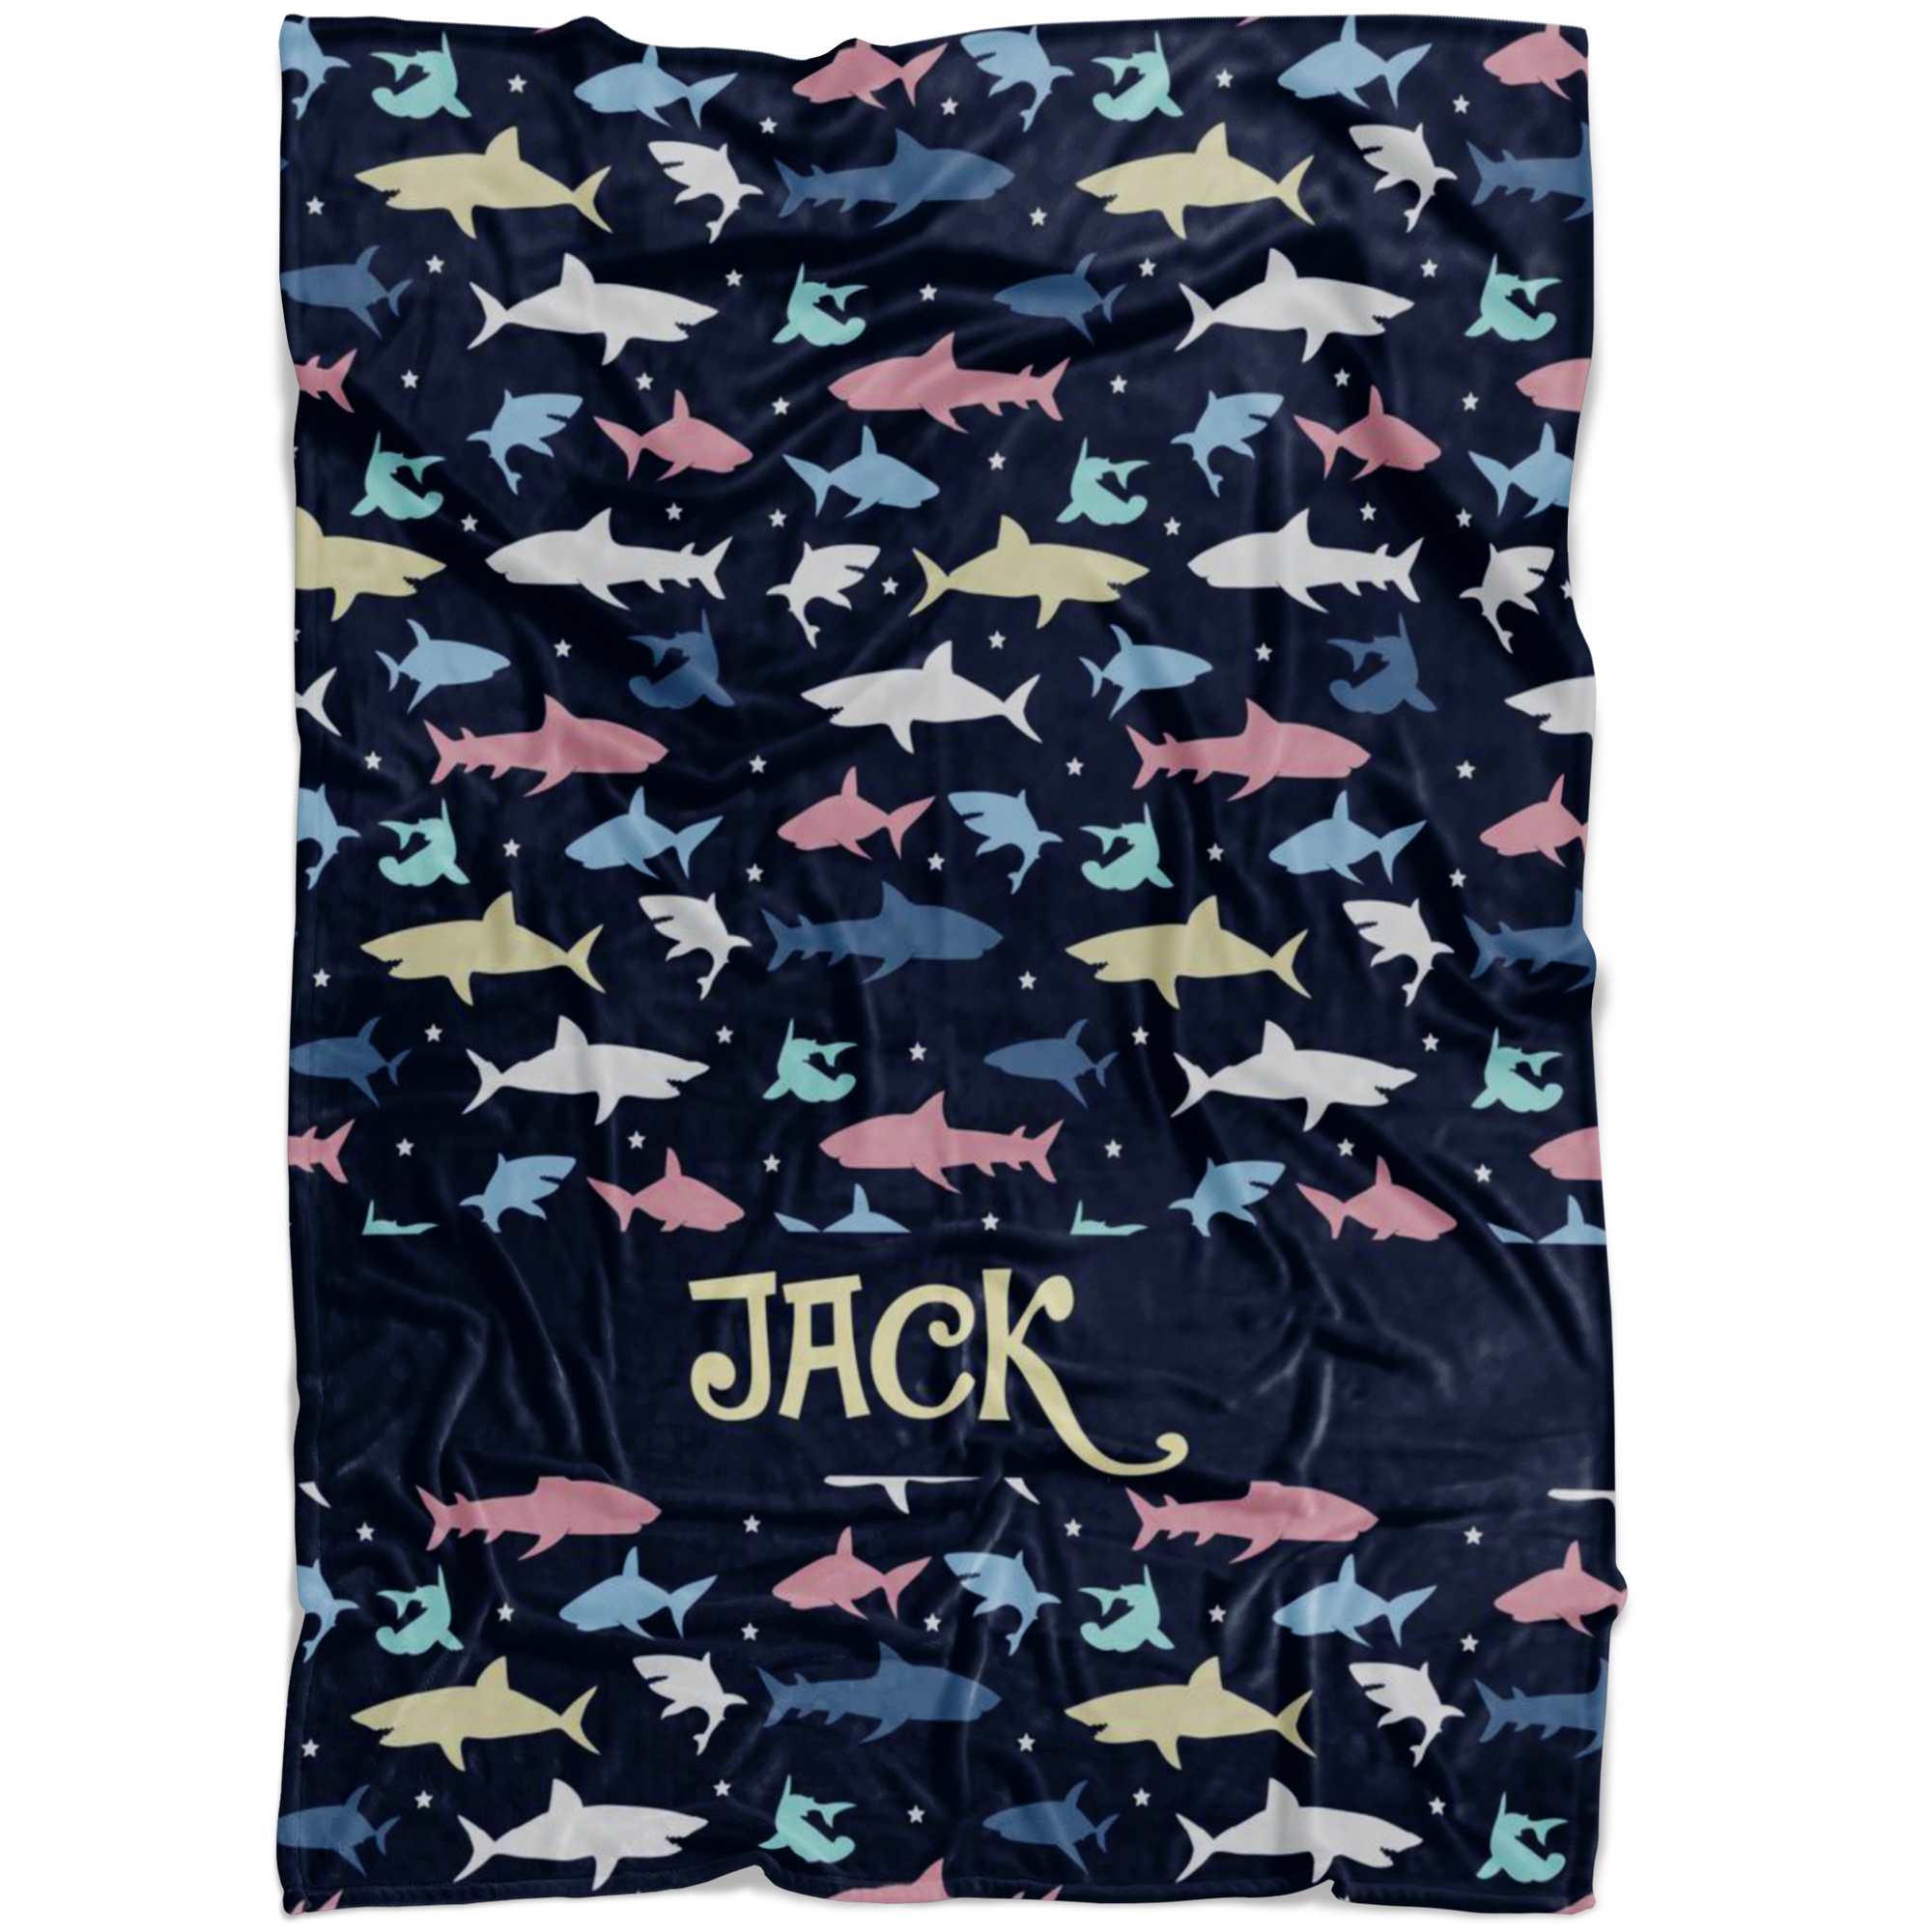 Personalized Name Shark Blanket for Kids - Jack